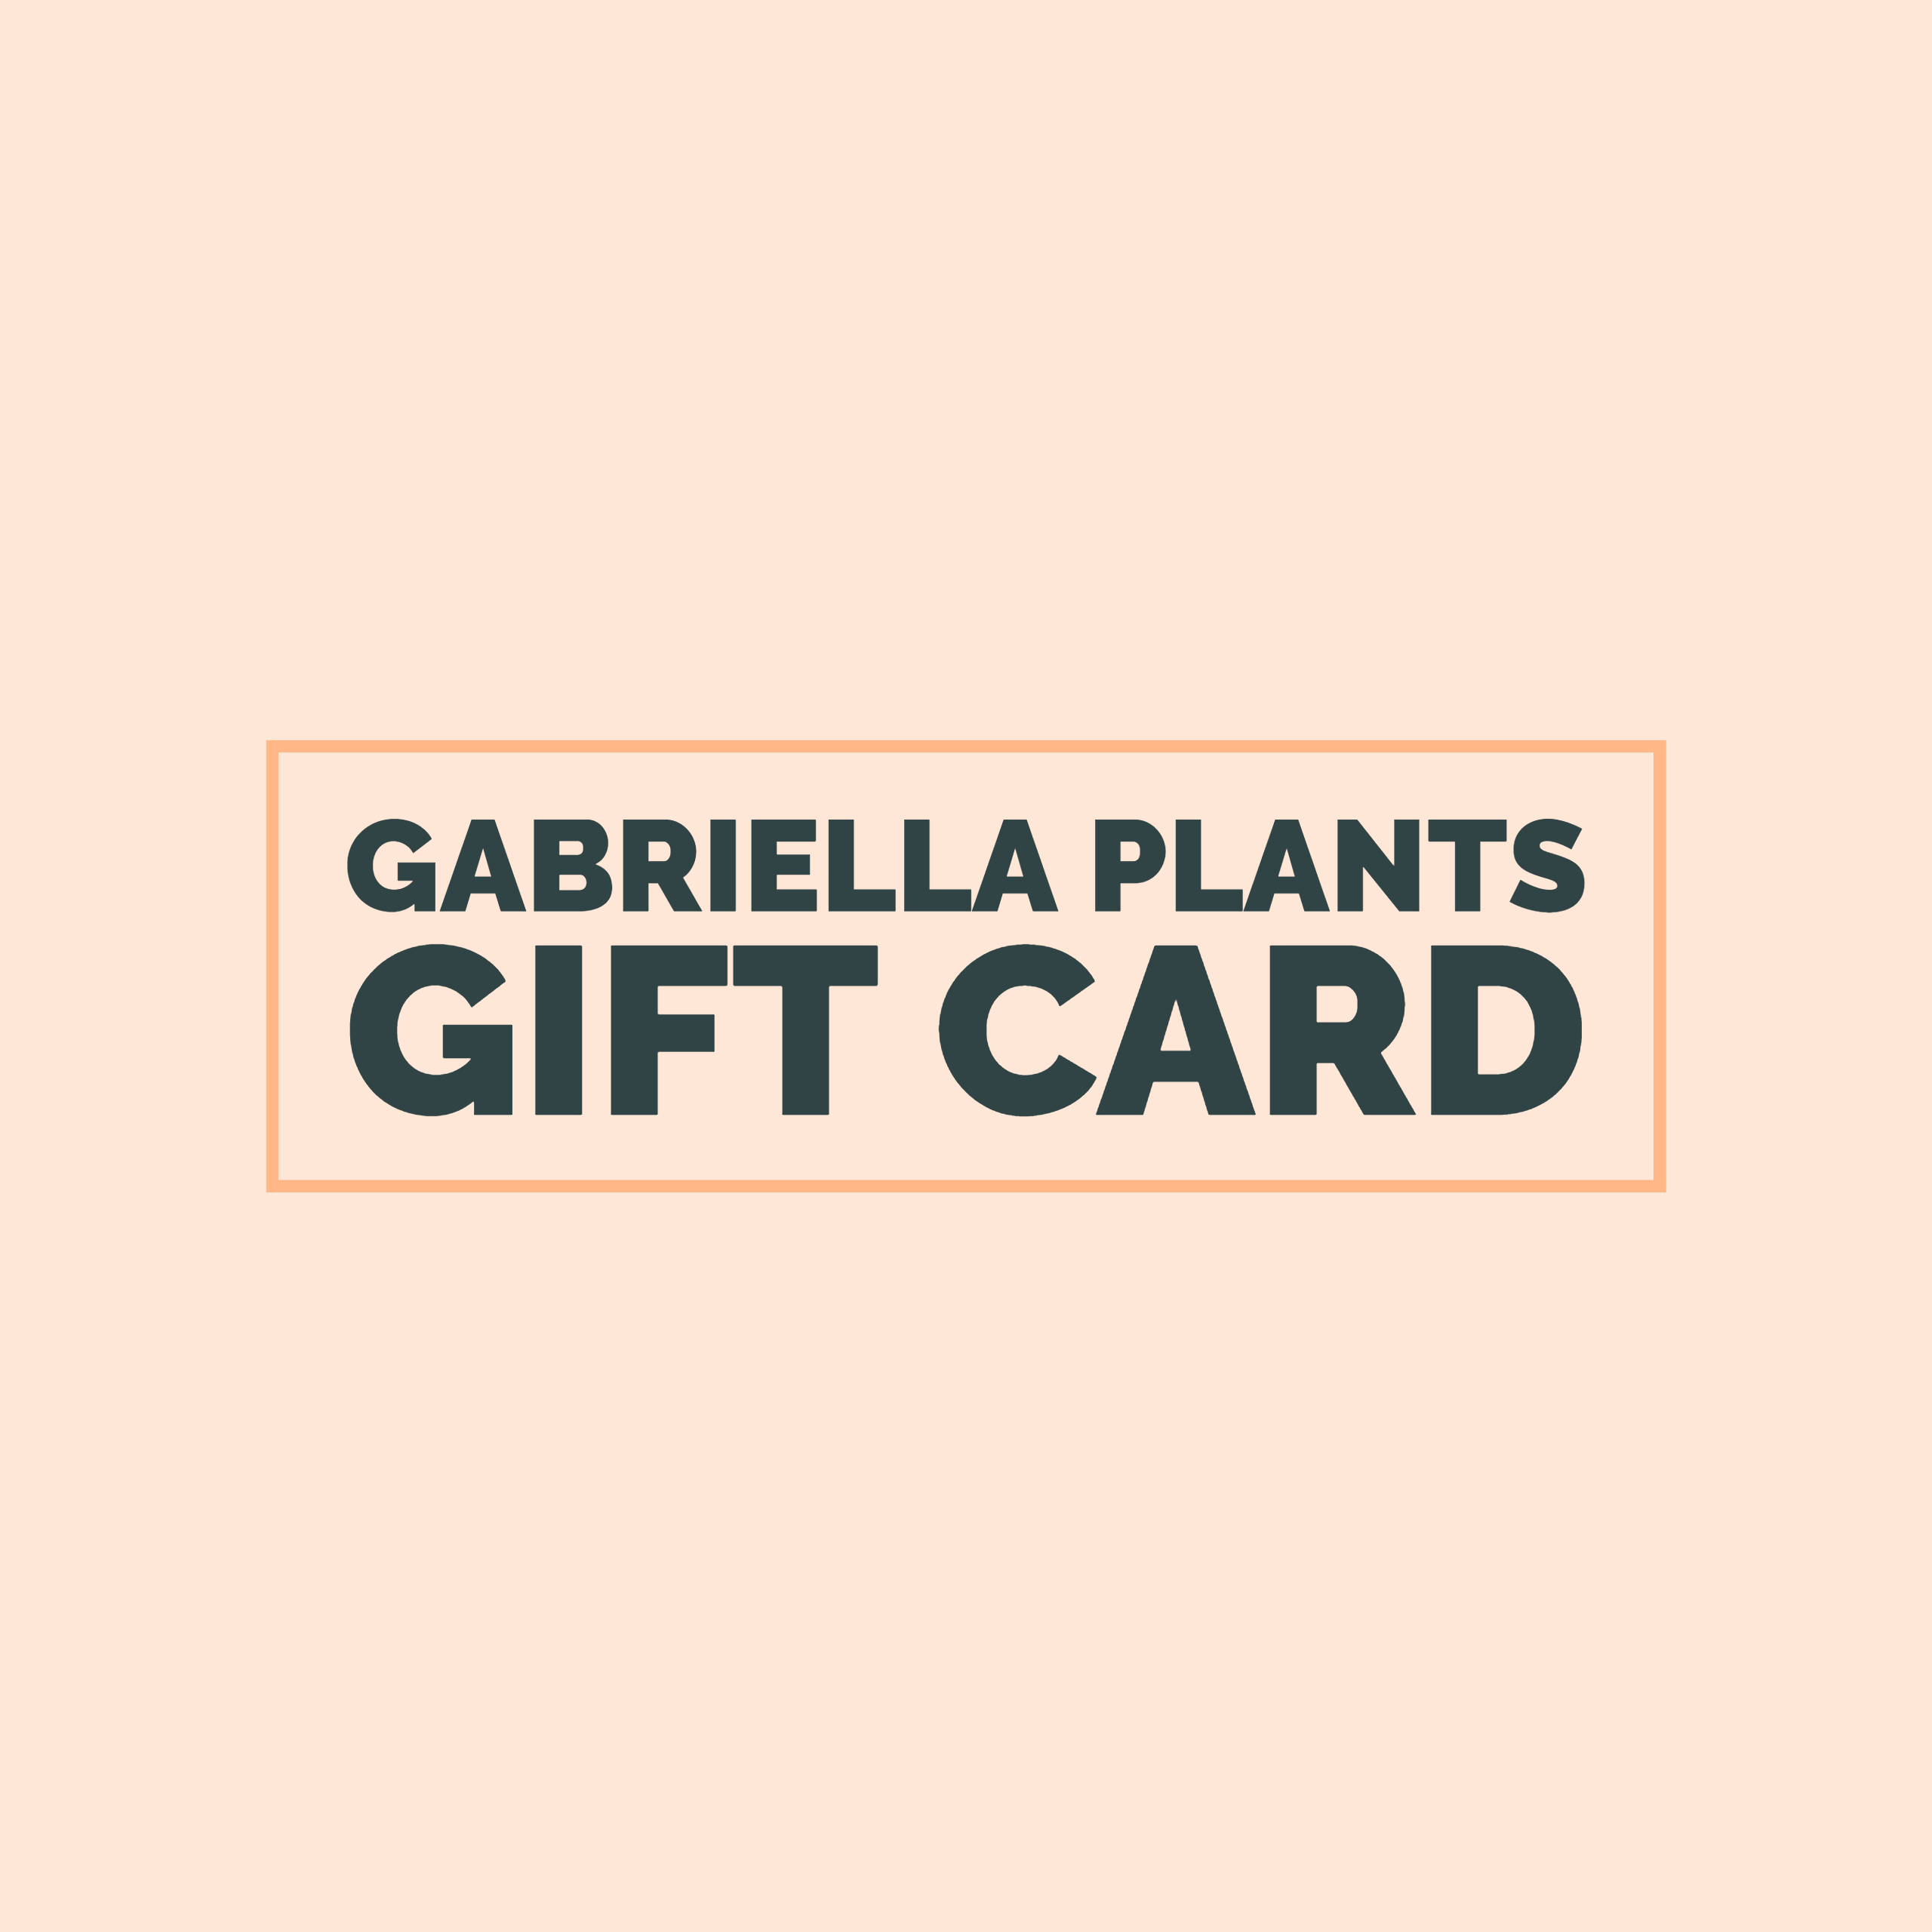 Gabriella Plants Gift Card Gift Card